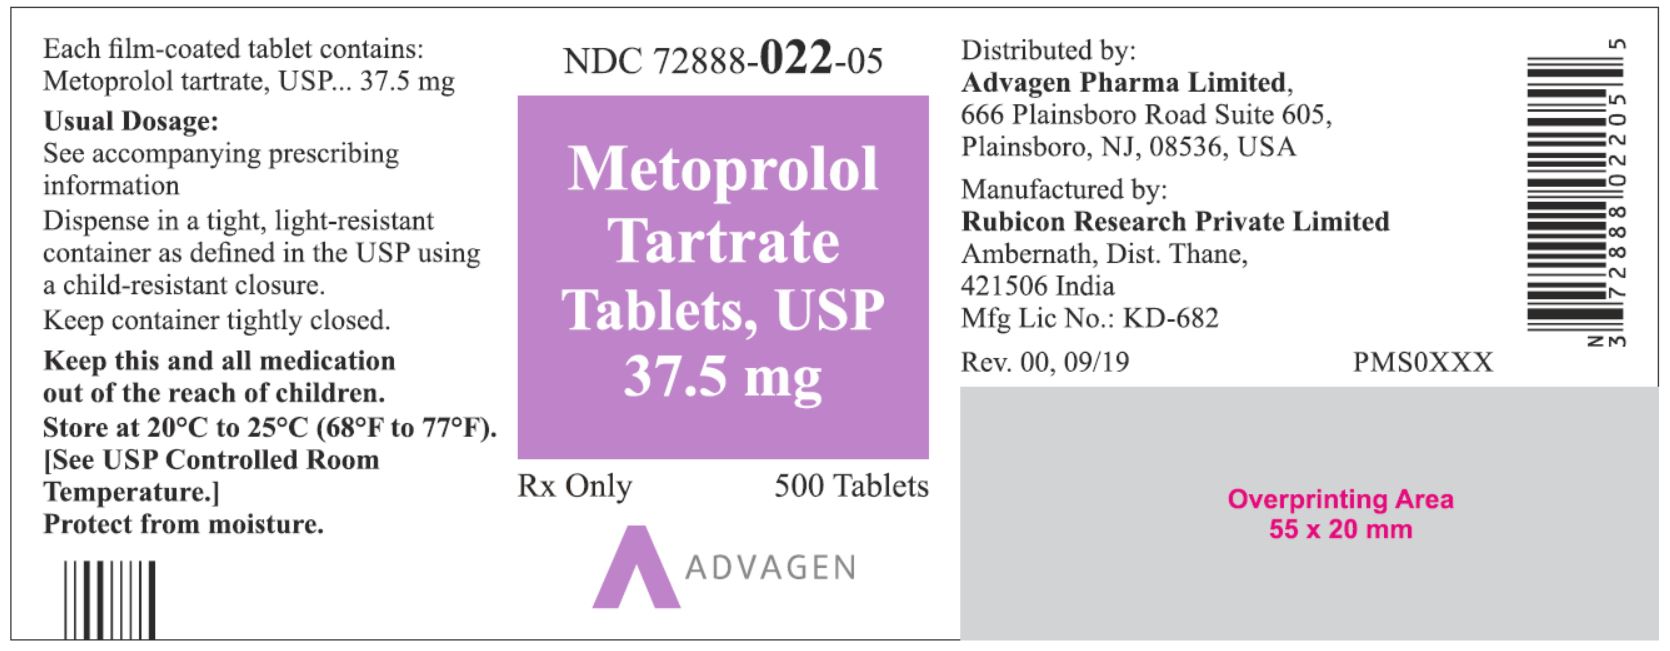 NDC: <a href=/NDC/72888-022-05>72888-022-05</a> - Metoprolol Tartrate Tablets, USP 37.5 mg - 500 Tablets